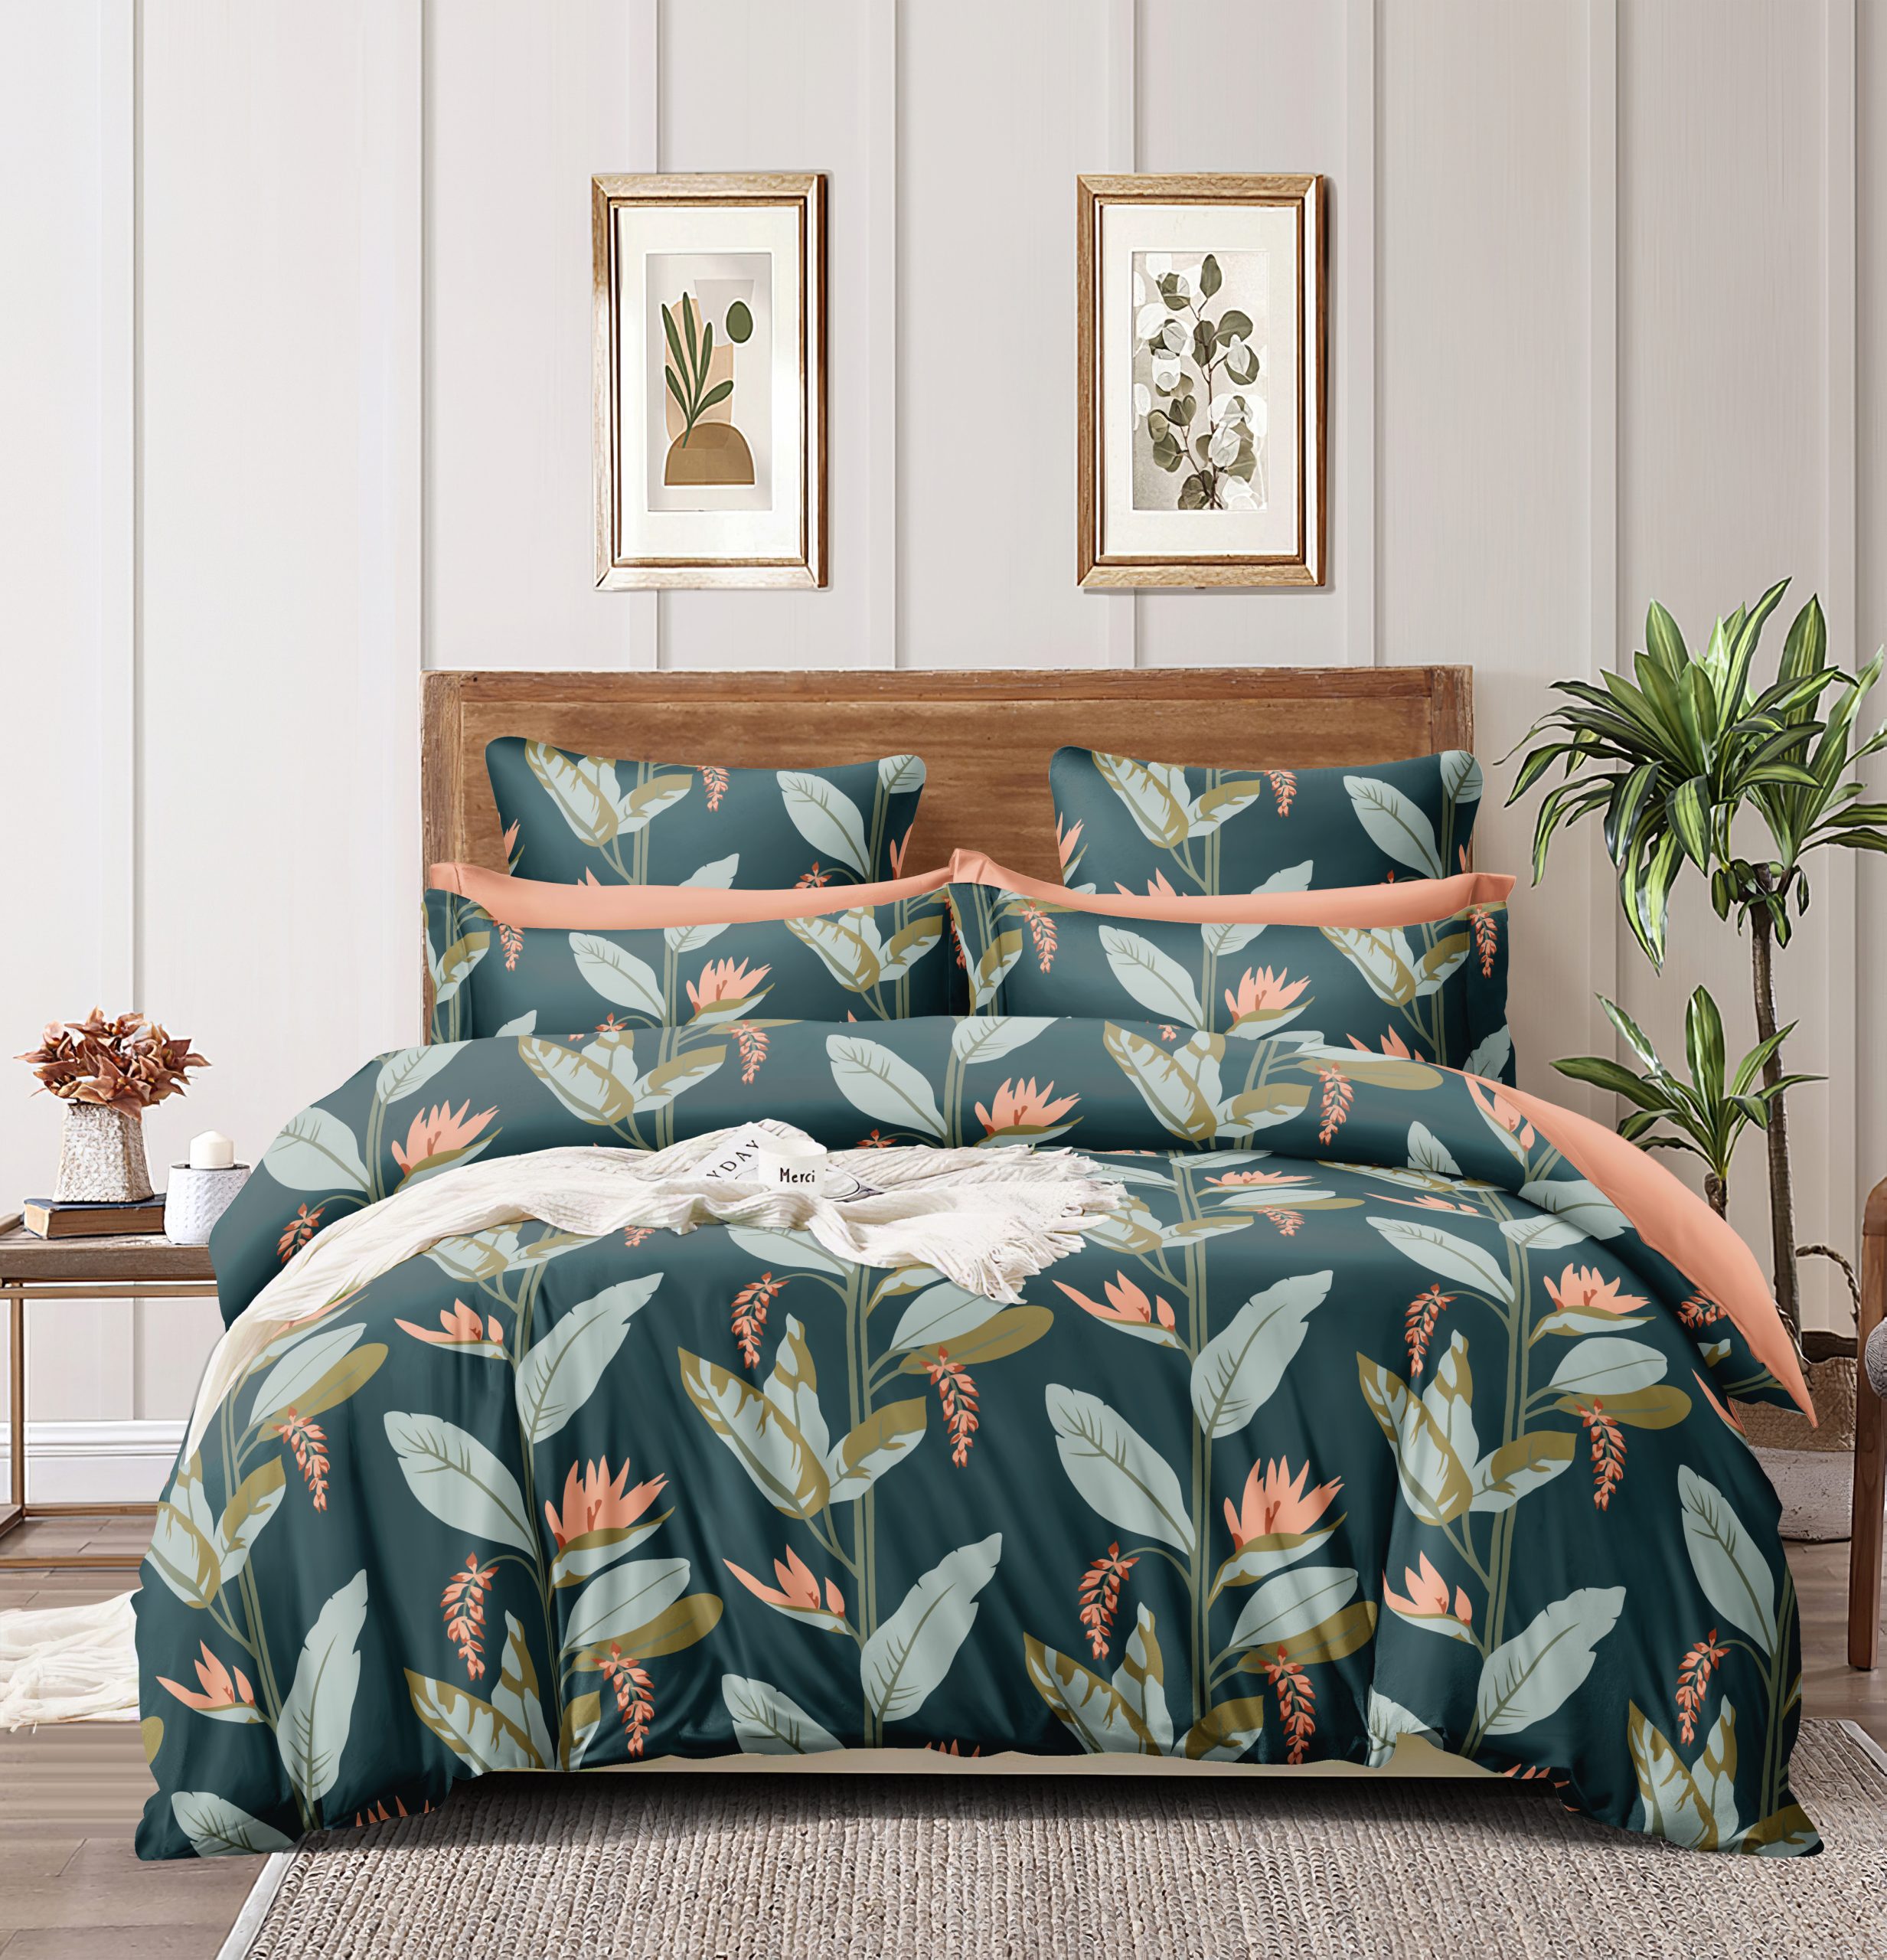 Homewards Teal Green Tropical Comforter – 100% Polyester, Ultra Soft Handfeel, Color Fade Resistant